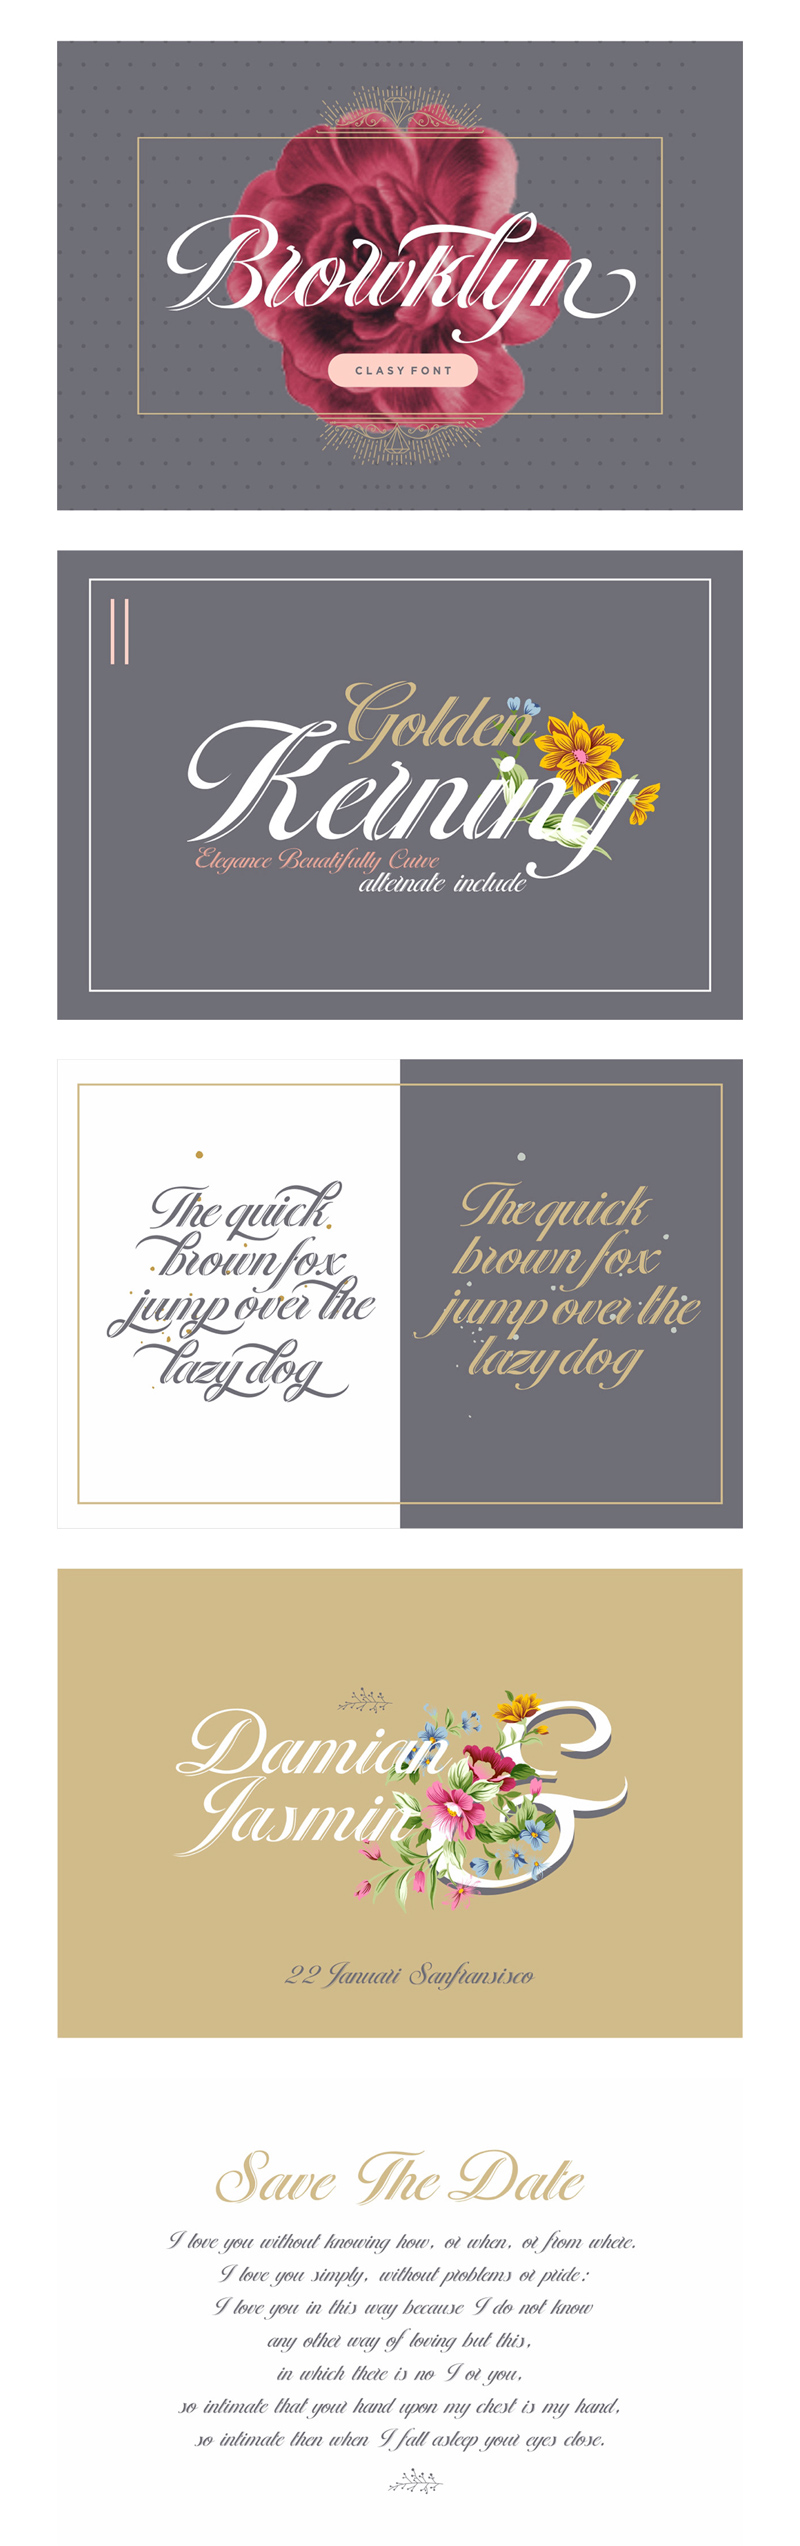 Browklyn Font - мода и свадебная шрифт